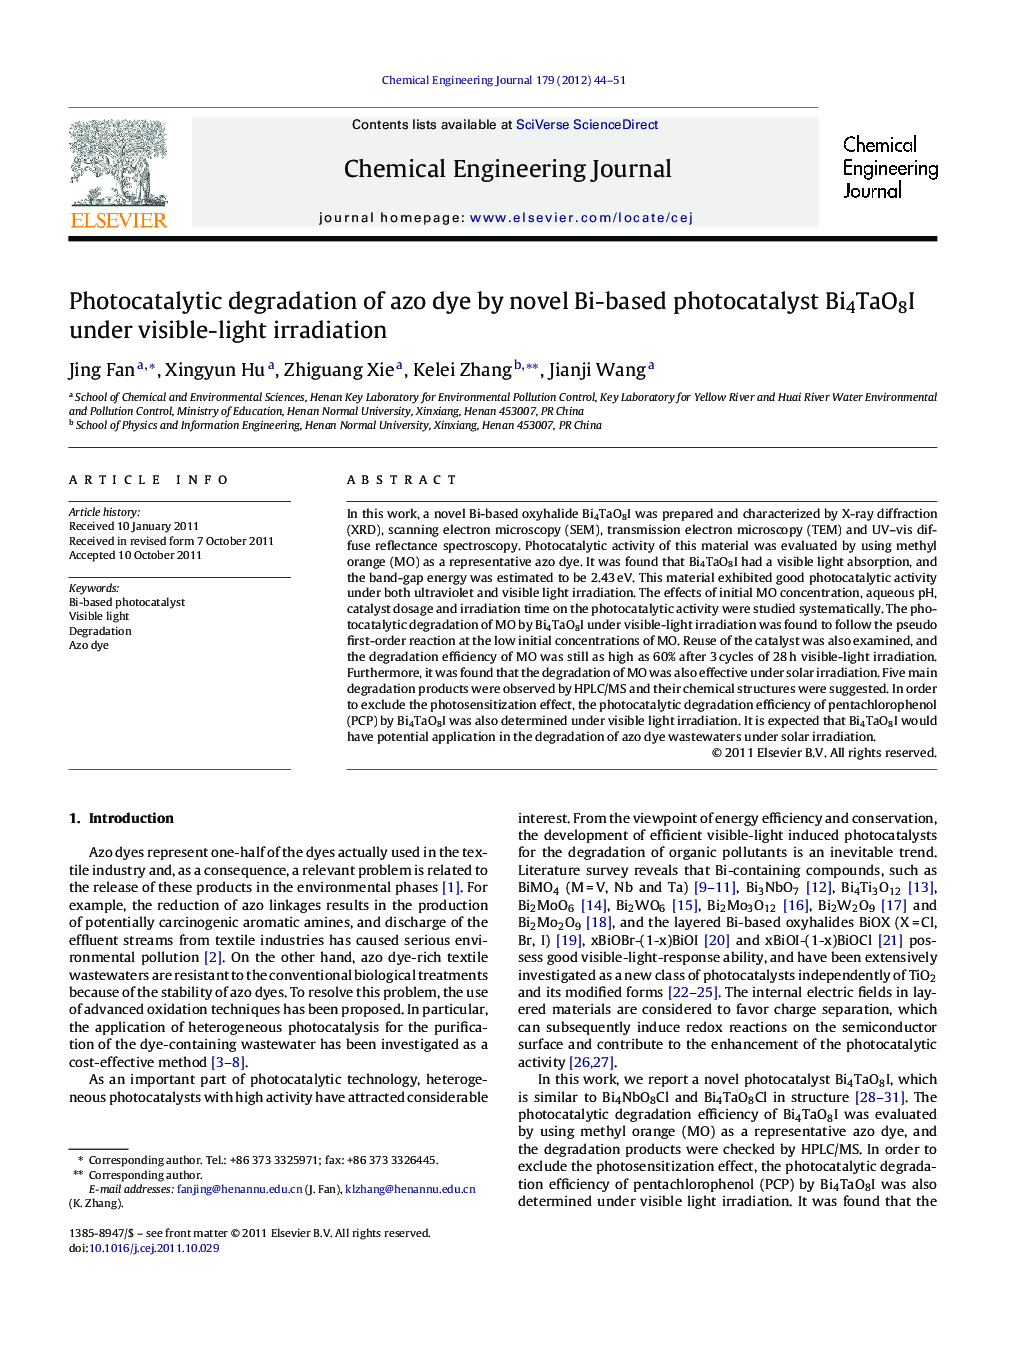 Photocatalytic degradation of azo dye by novel Bi-based photocatalyst Bi4TaO8I under visible-light irradiation